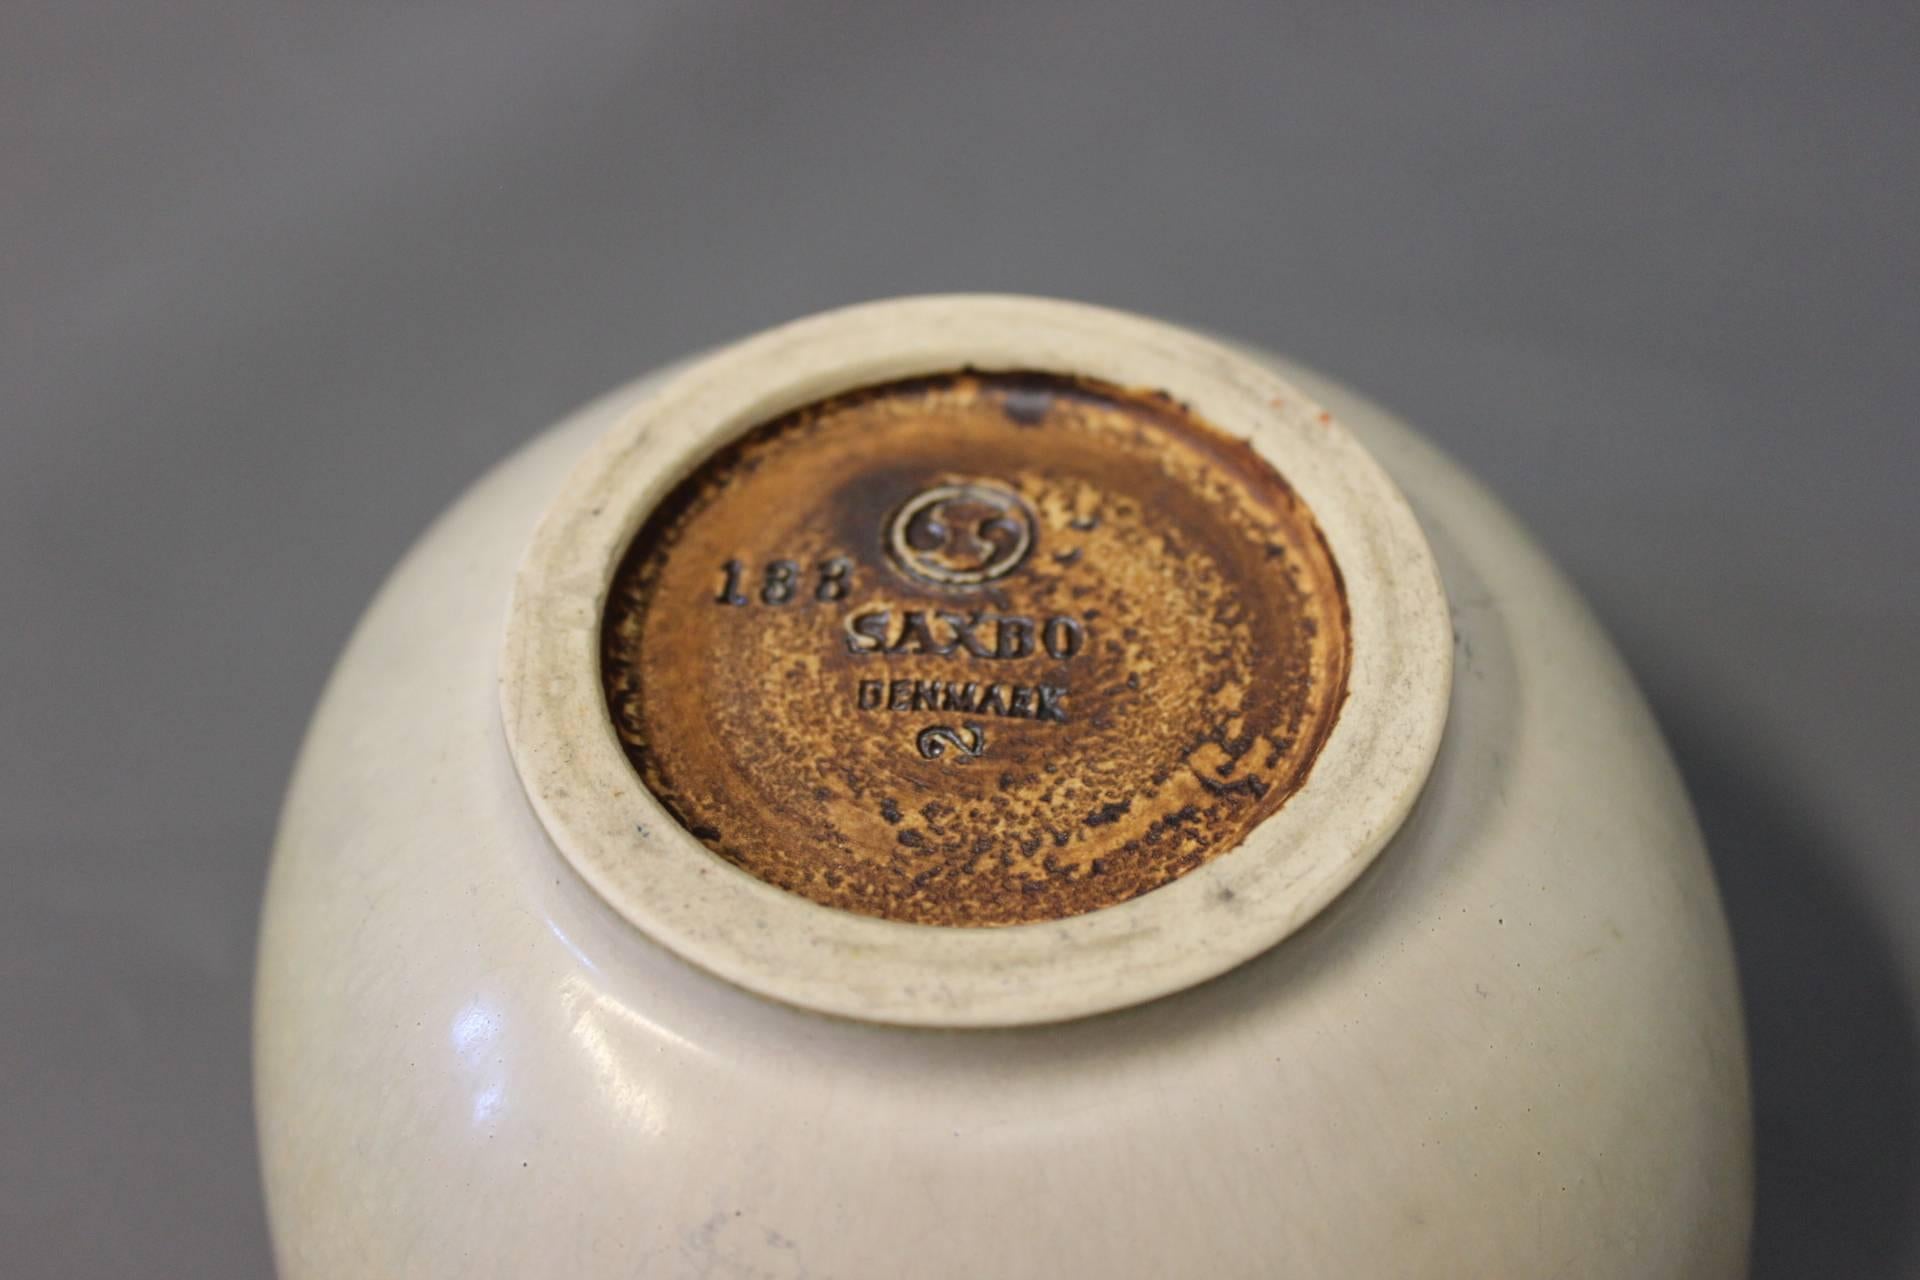 Mid-20th Century Small Saxbo Bowl Designed by Natalia Krebs, No. 188, 1940s